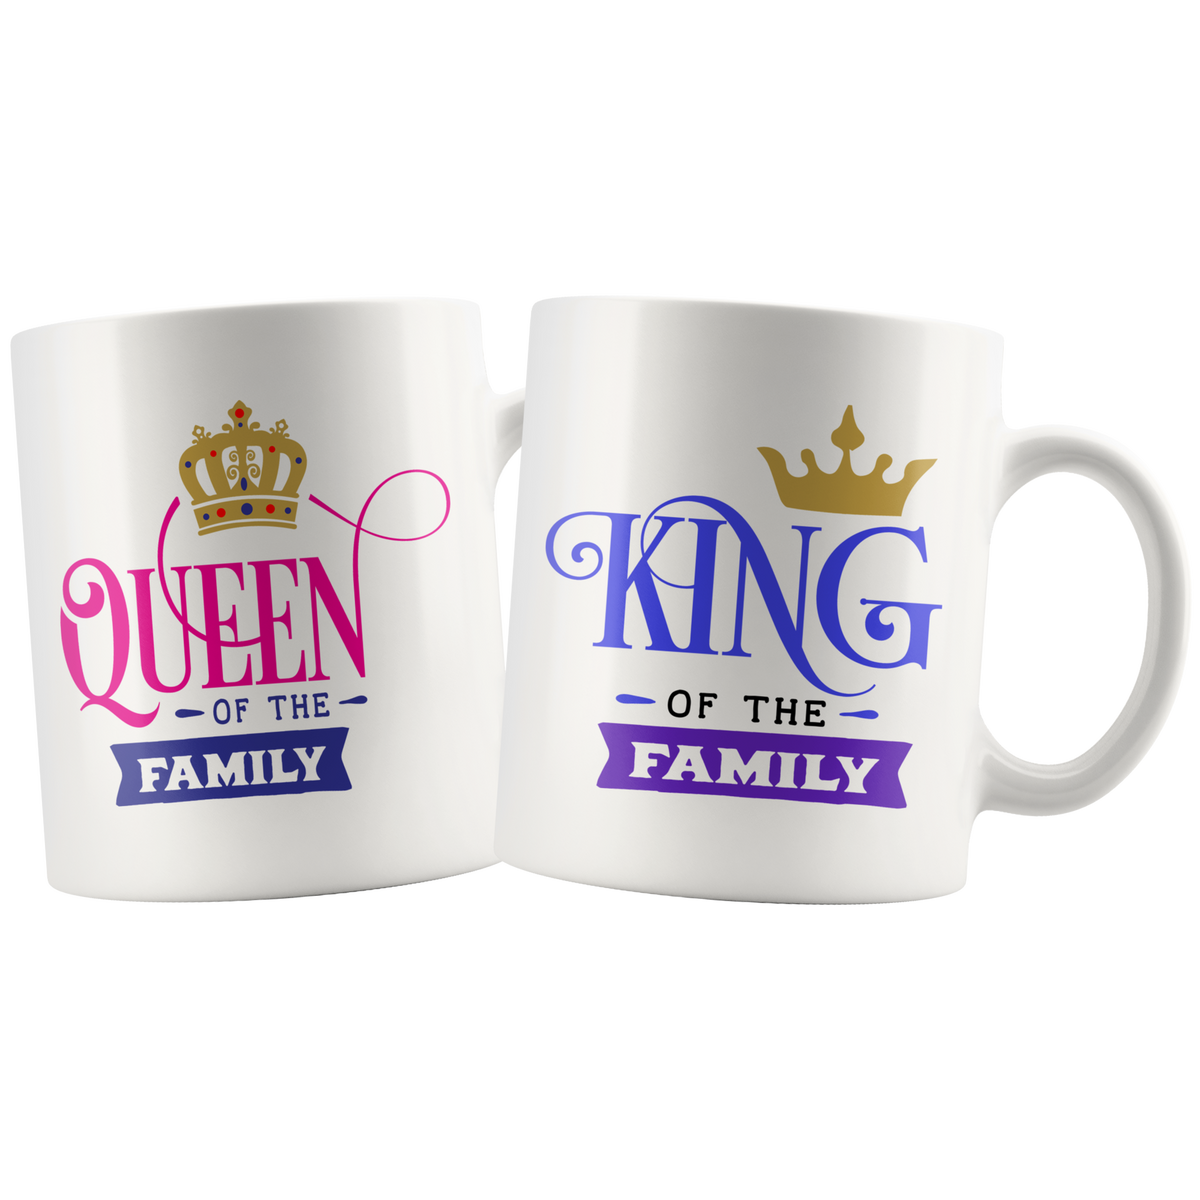 King Queen Mug